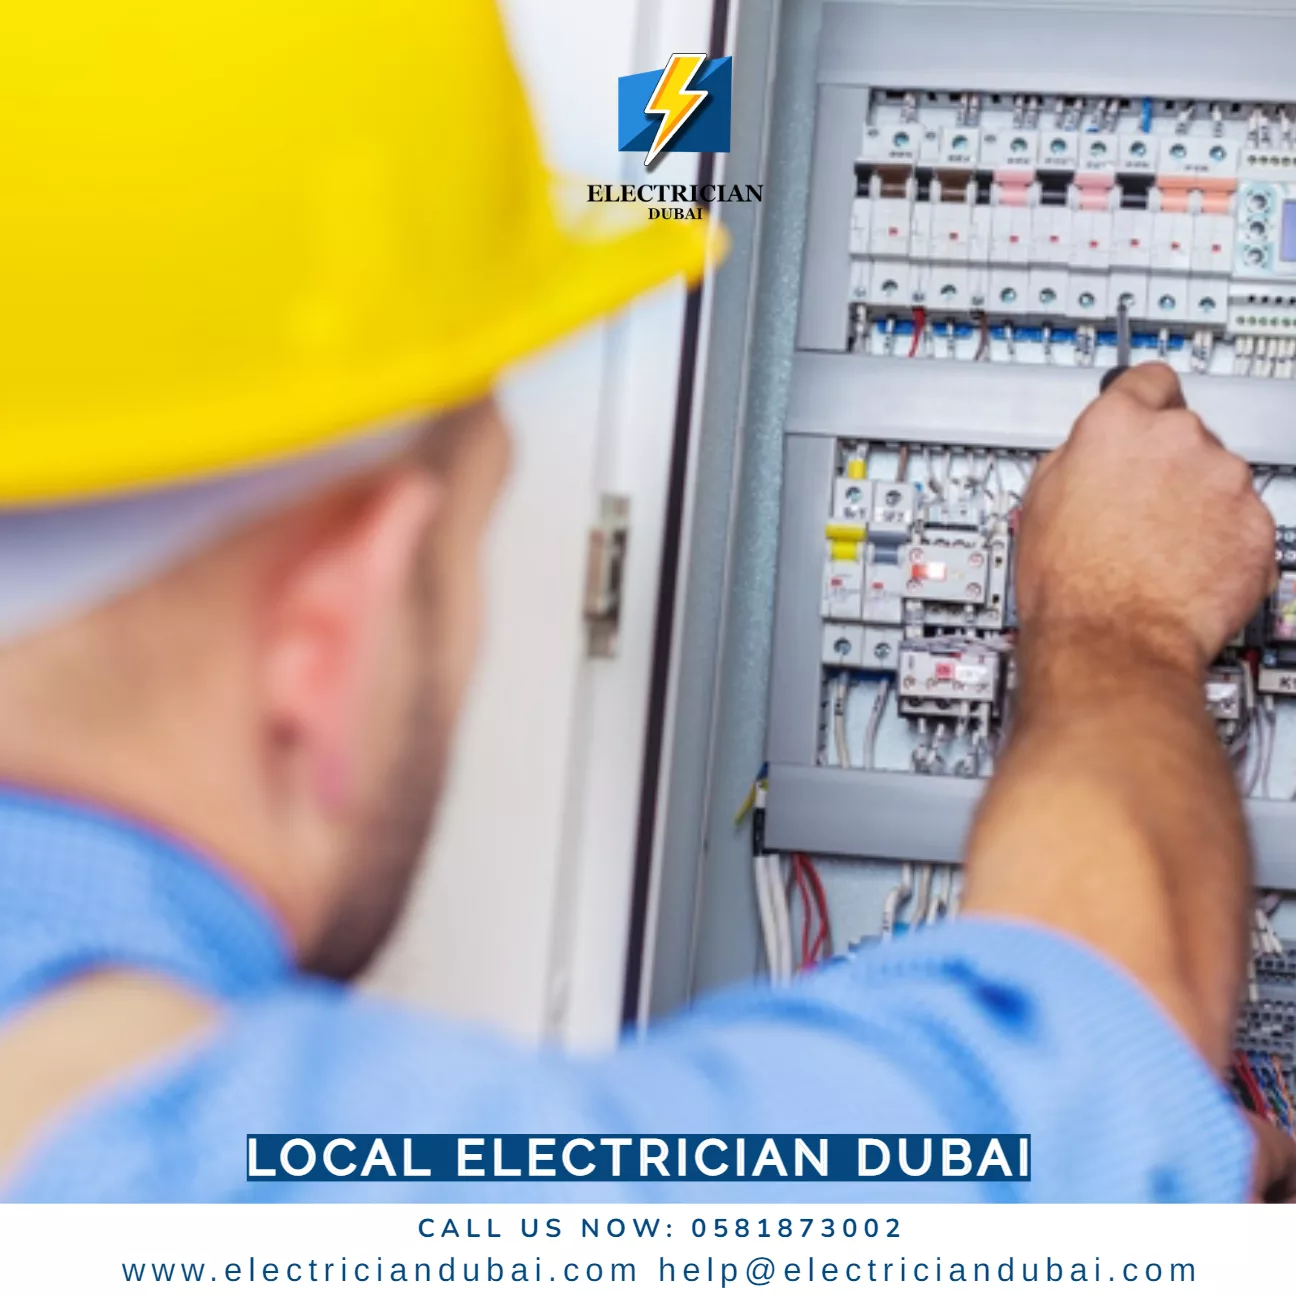 Local Electrician Dubai